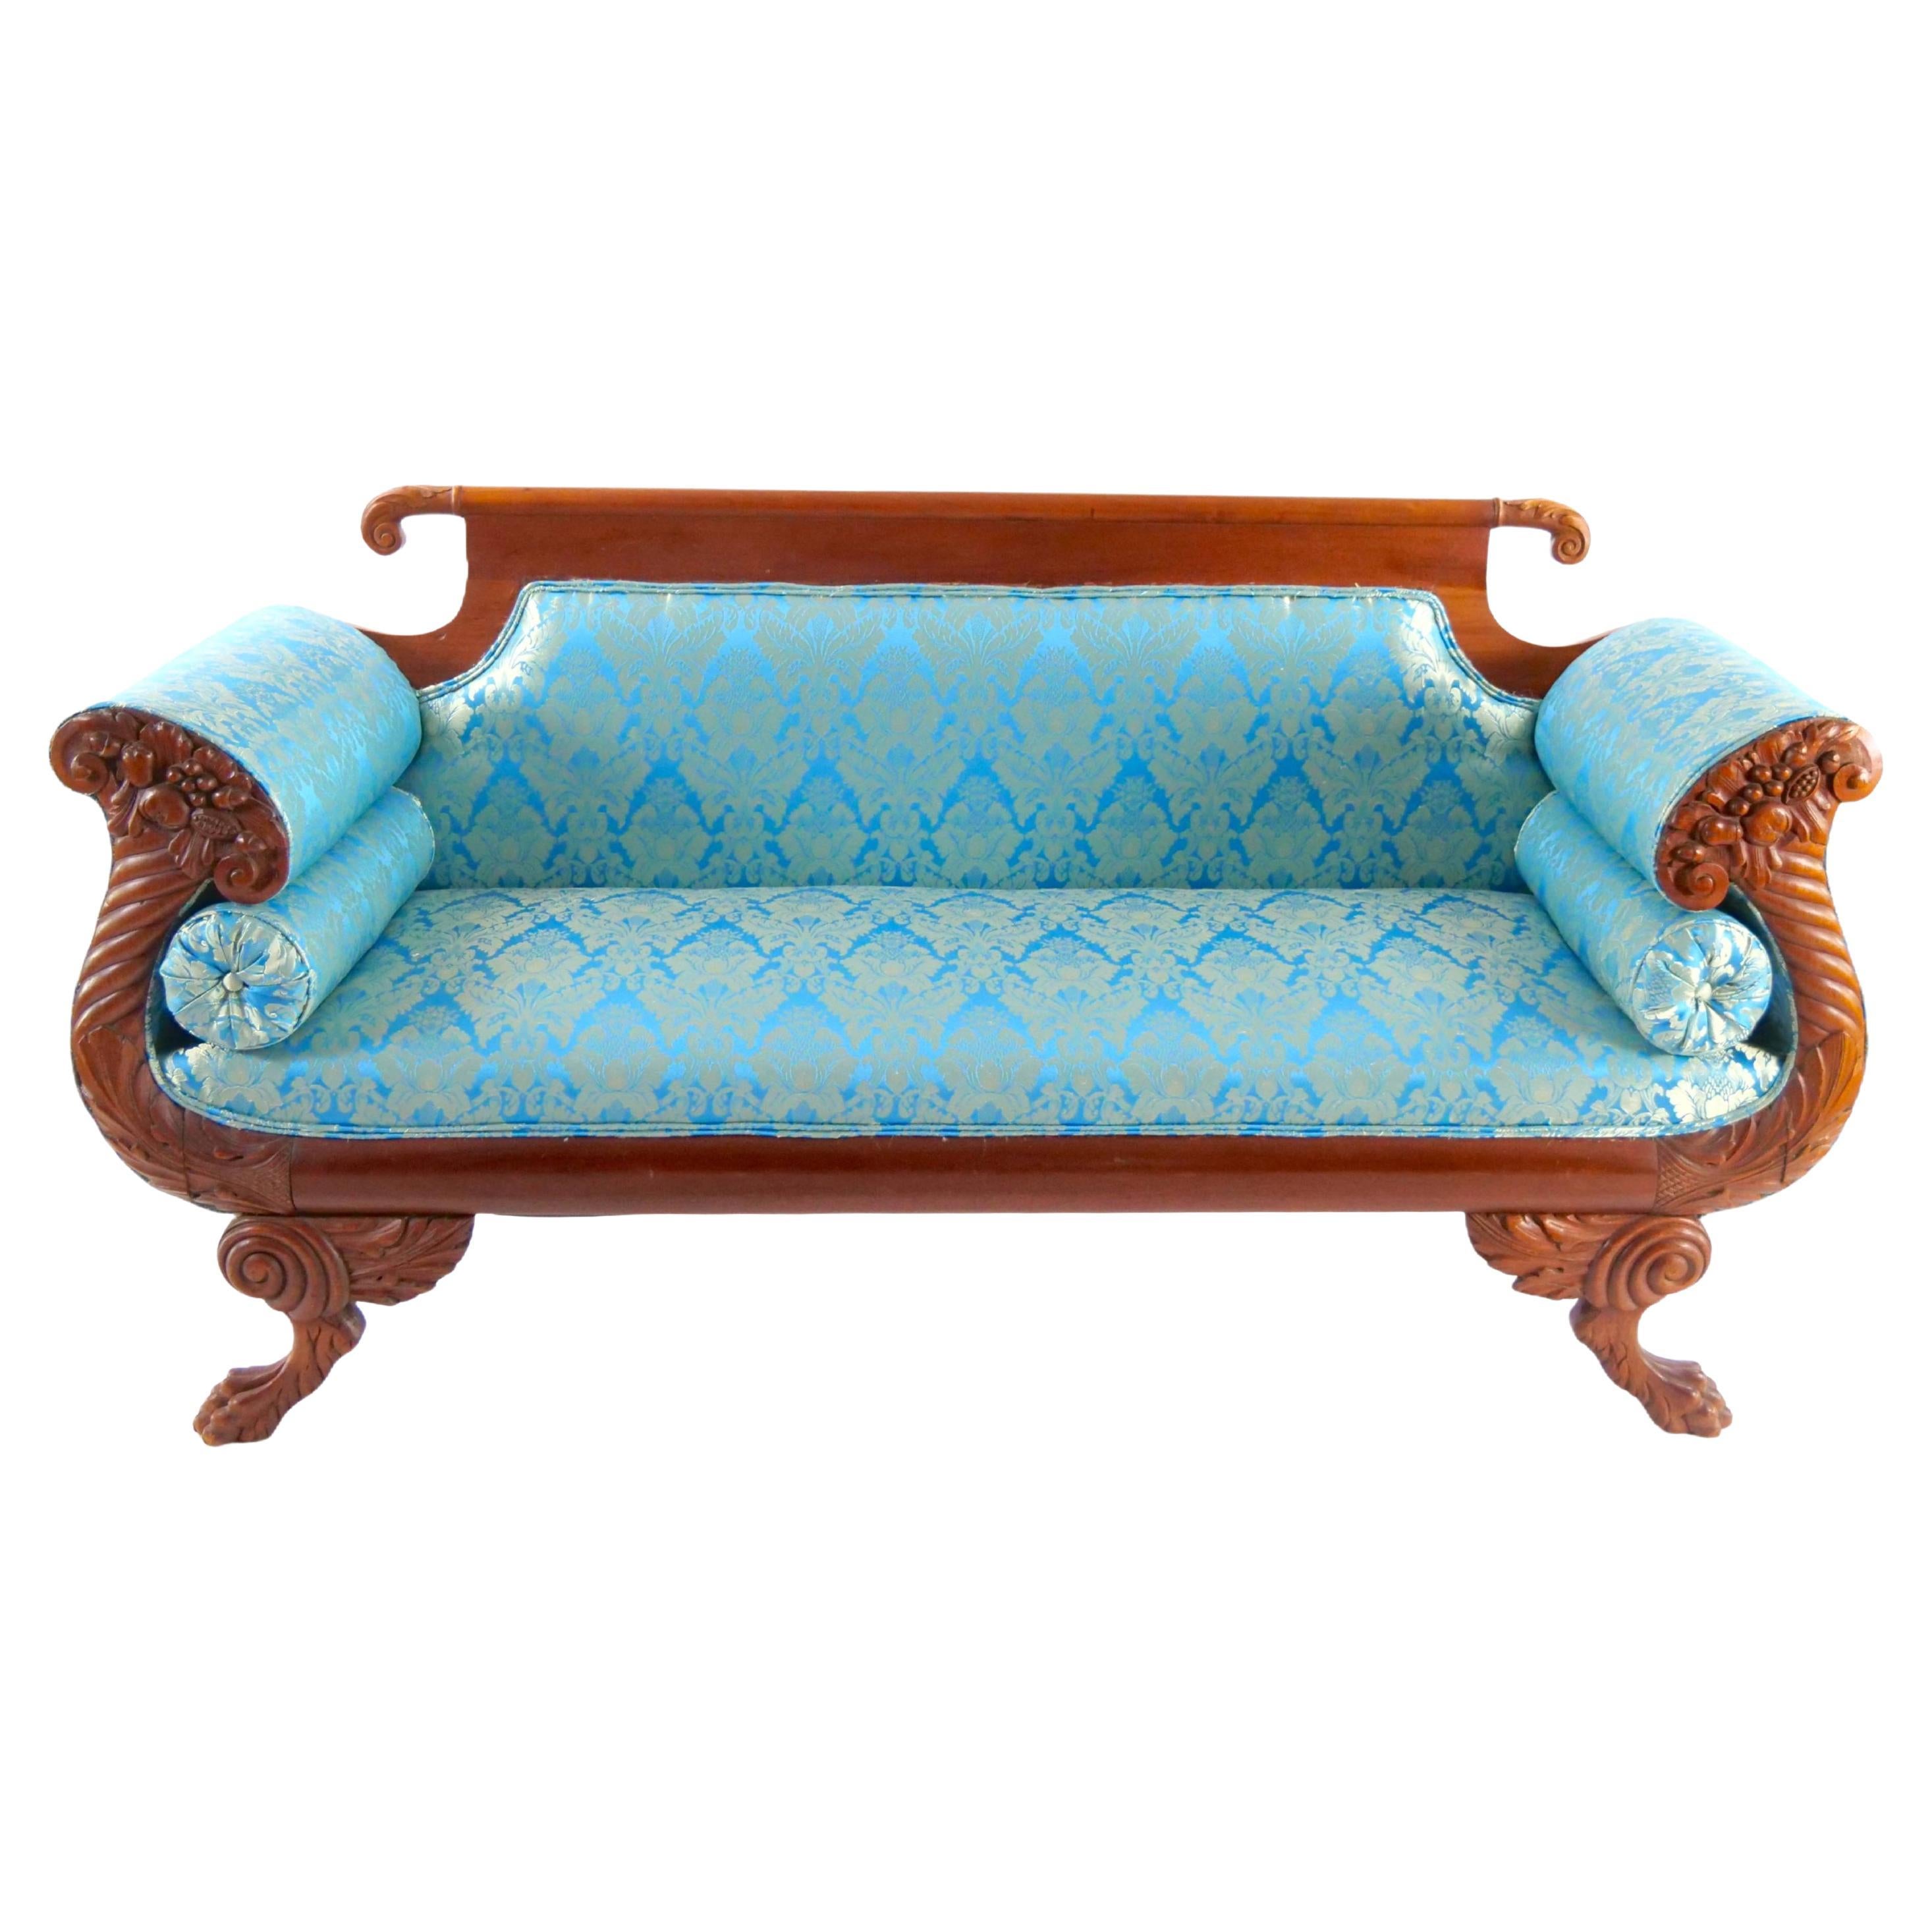 Mahagoniholz gerahmtes gepolstertes Sofa im Empire-Stil des 19. Jahrhunderts